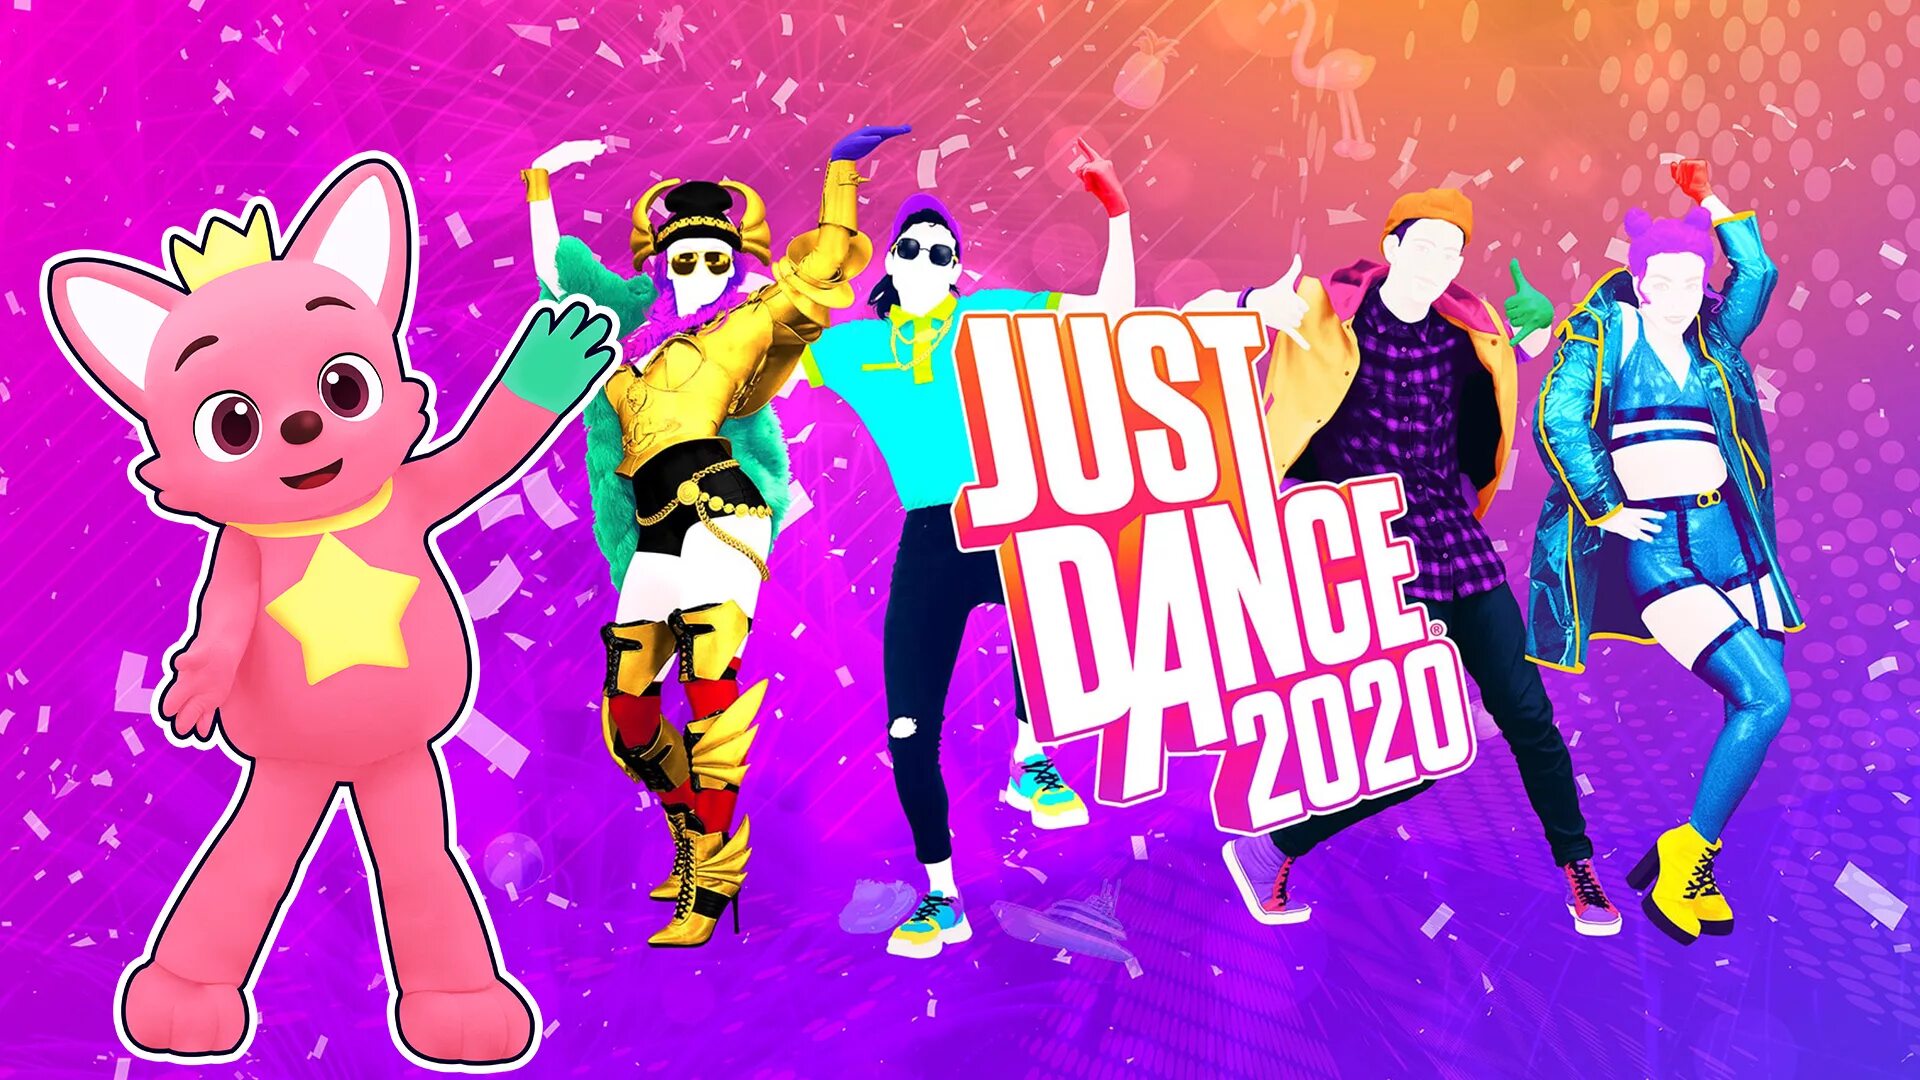 Джас дэнс. Джаст дэнс 2020. Just Dance заставка. Just Dance 2020 logo. Just Dance 2013.